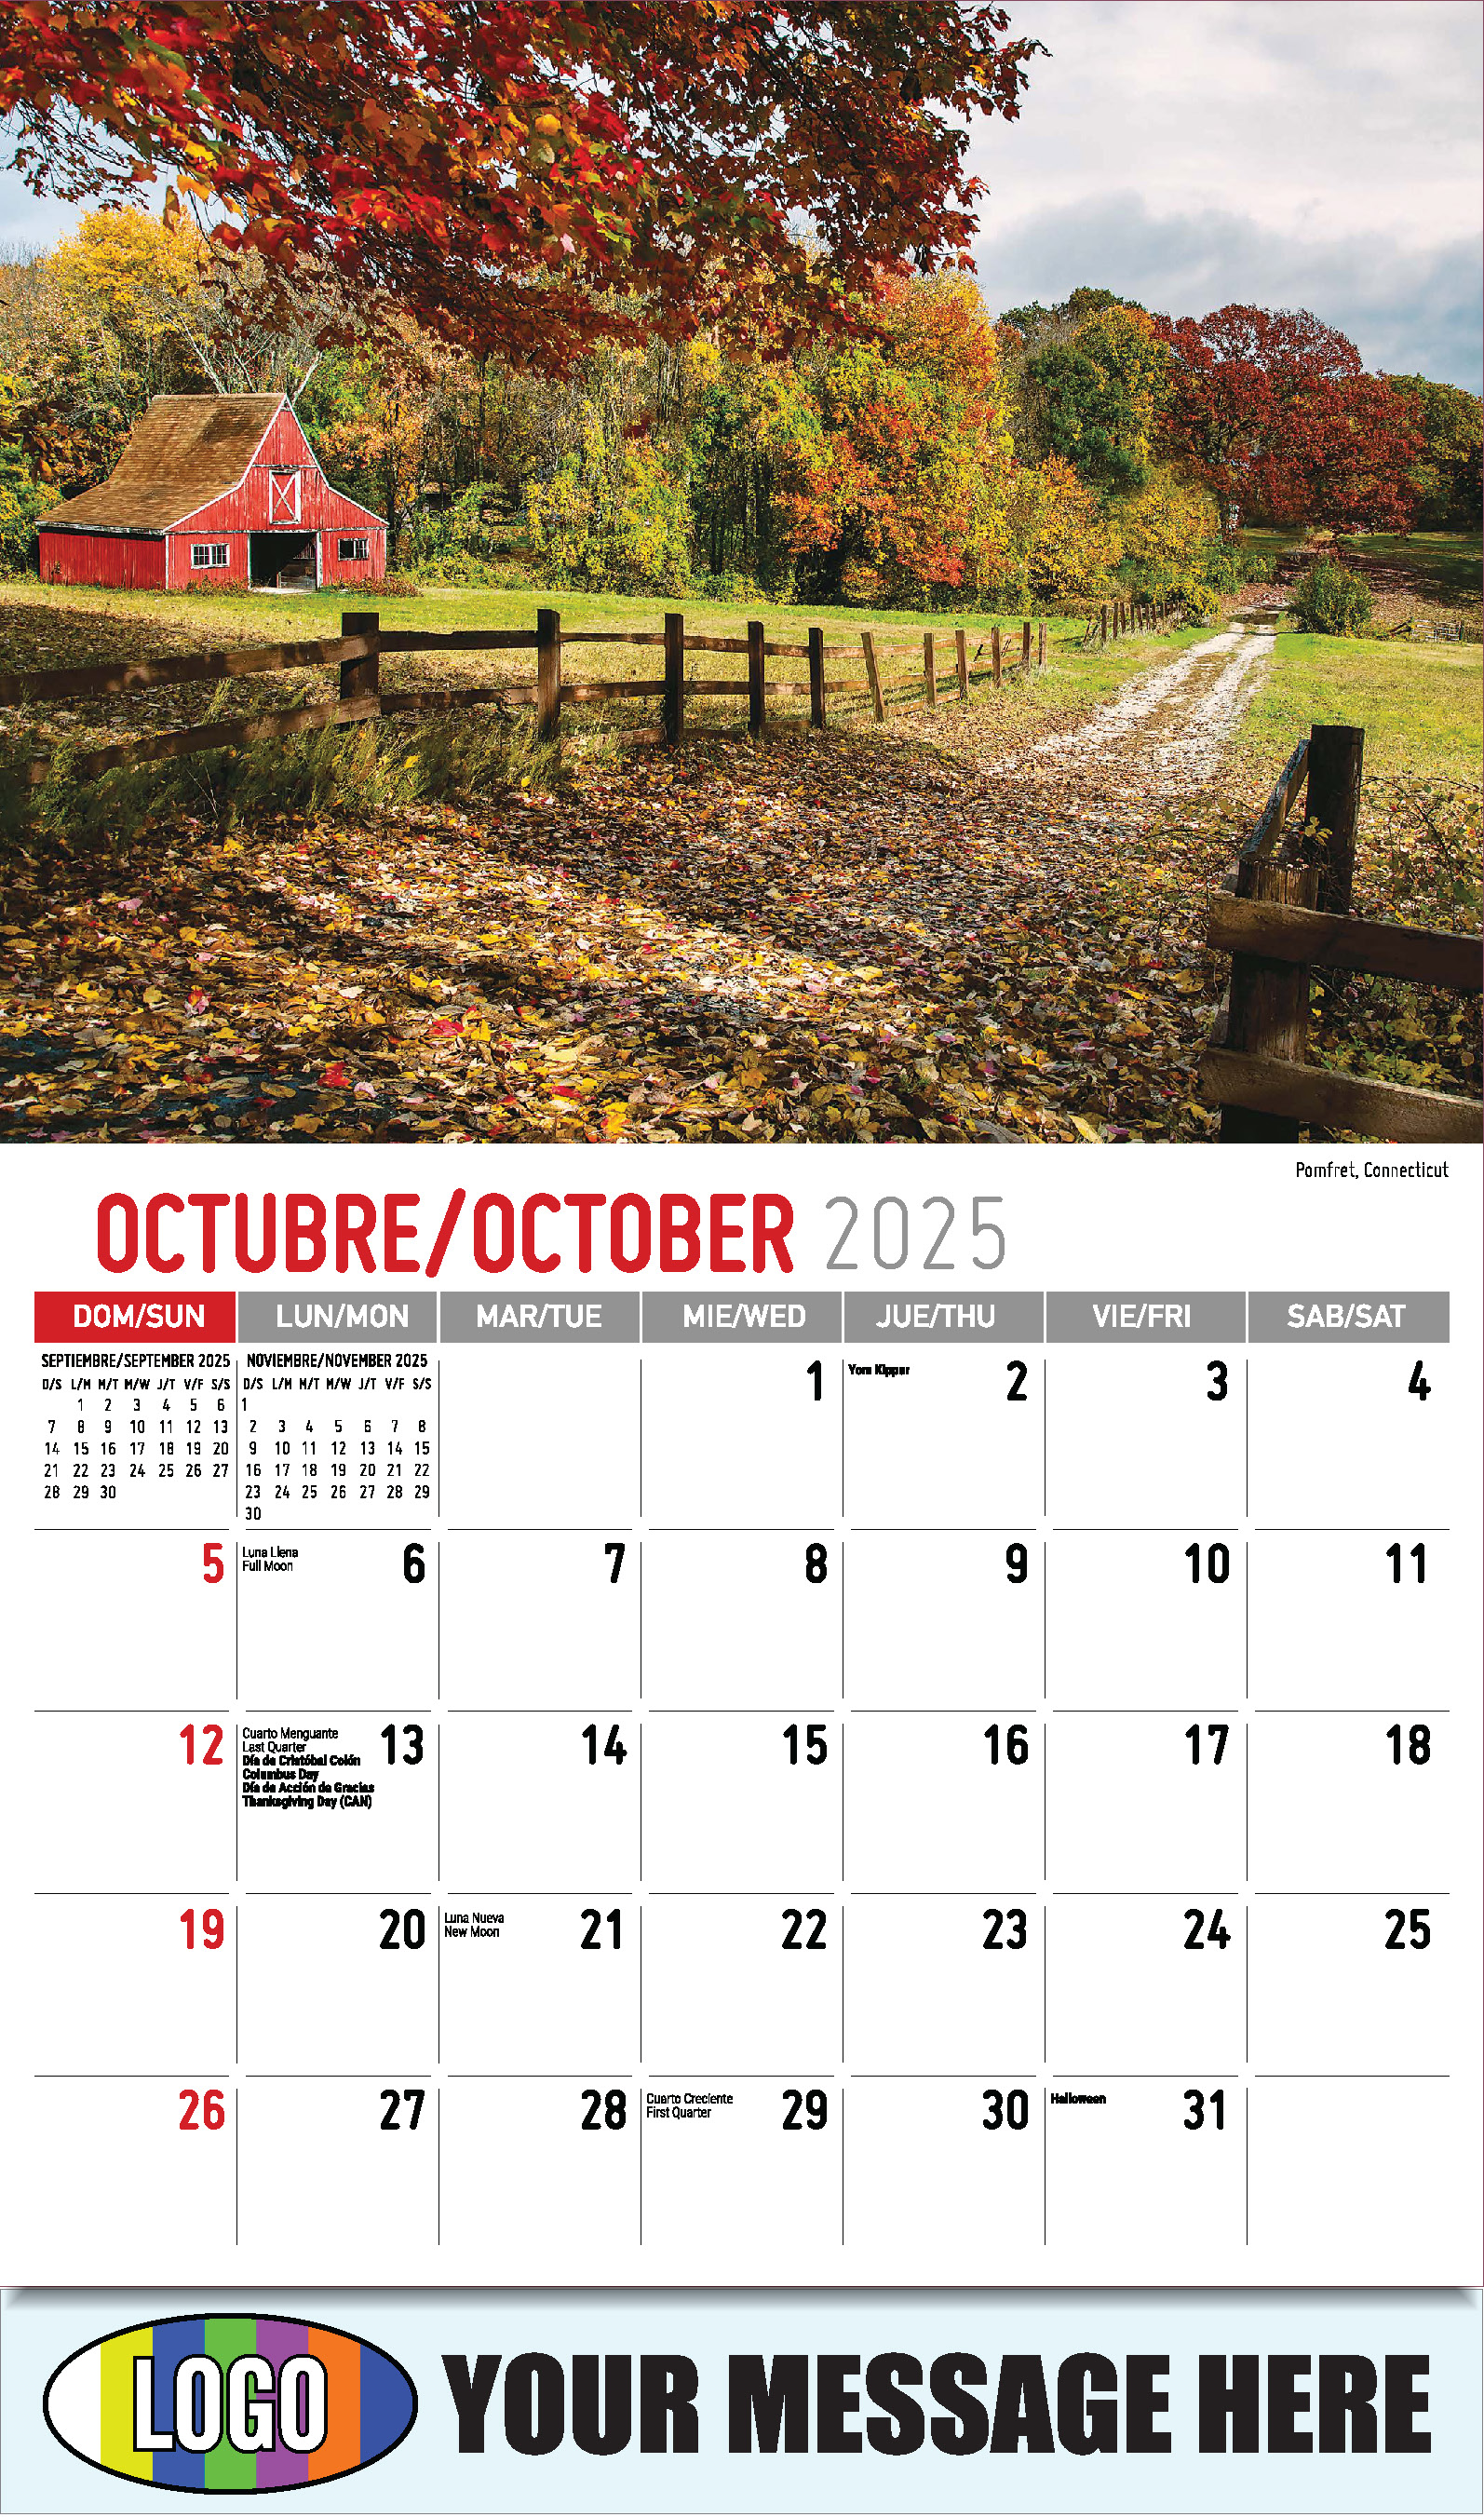 Scenes of America 2025 Bilingual Business Promo Calendar - October